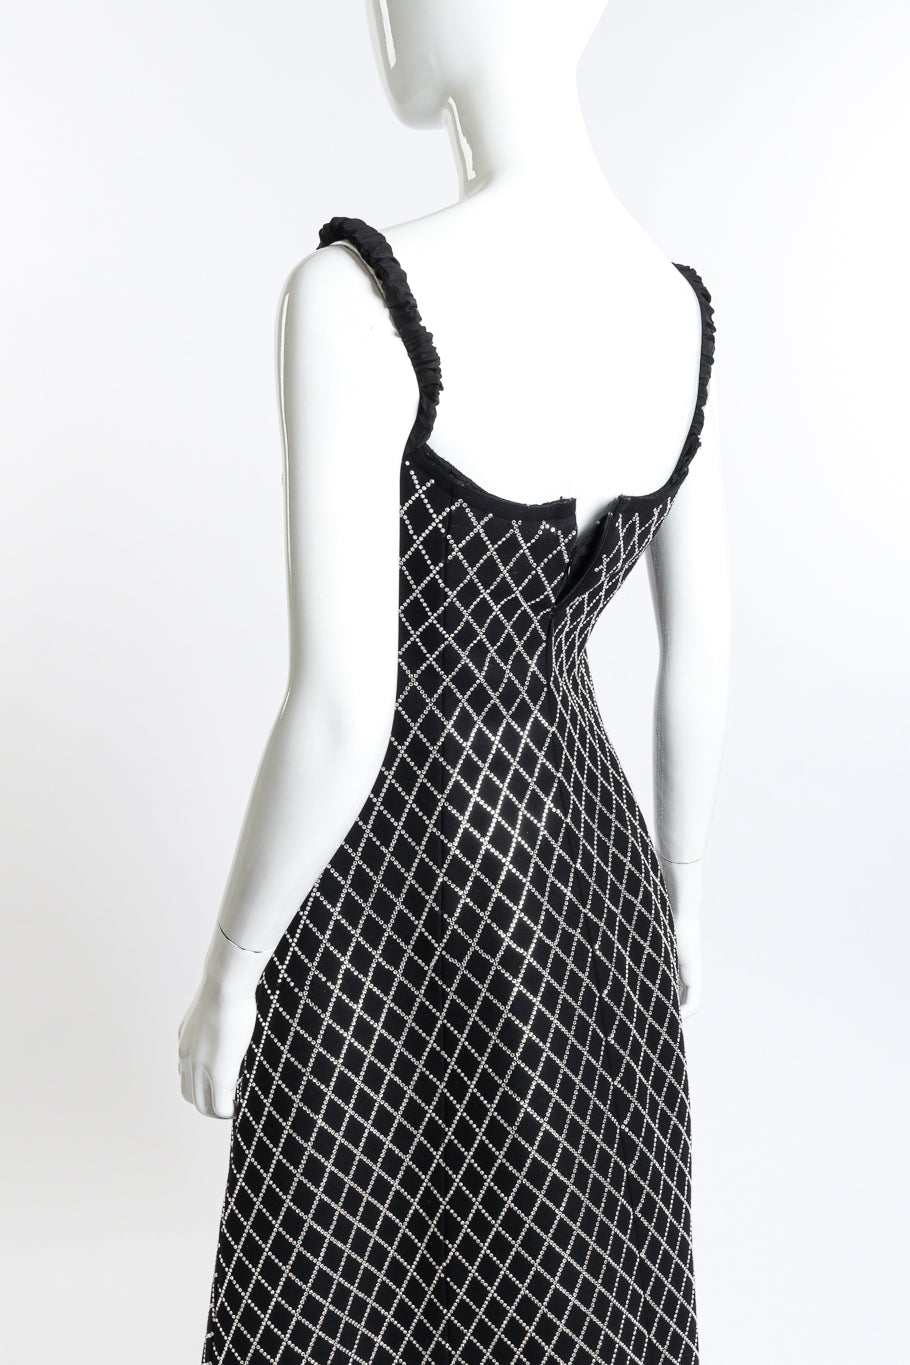 Khaite Diamond Crystal Studded Midi Dress 3/4 back on mannequin closeup @recess la